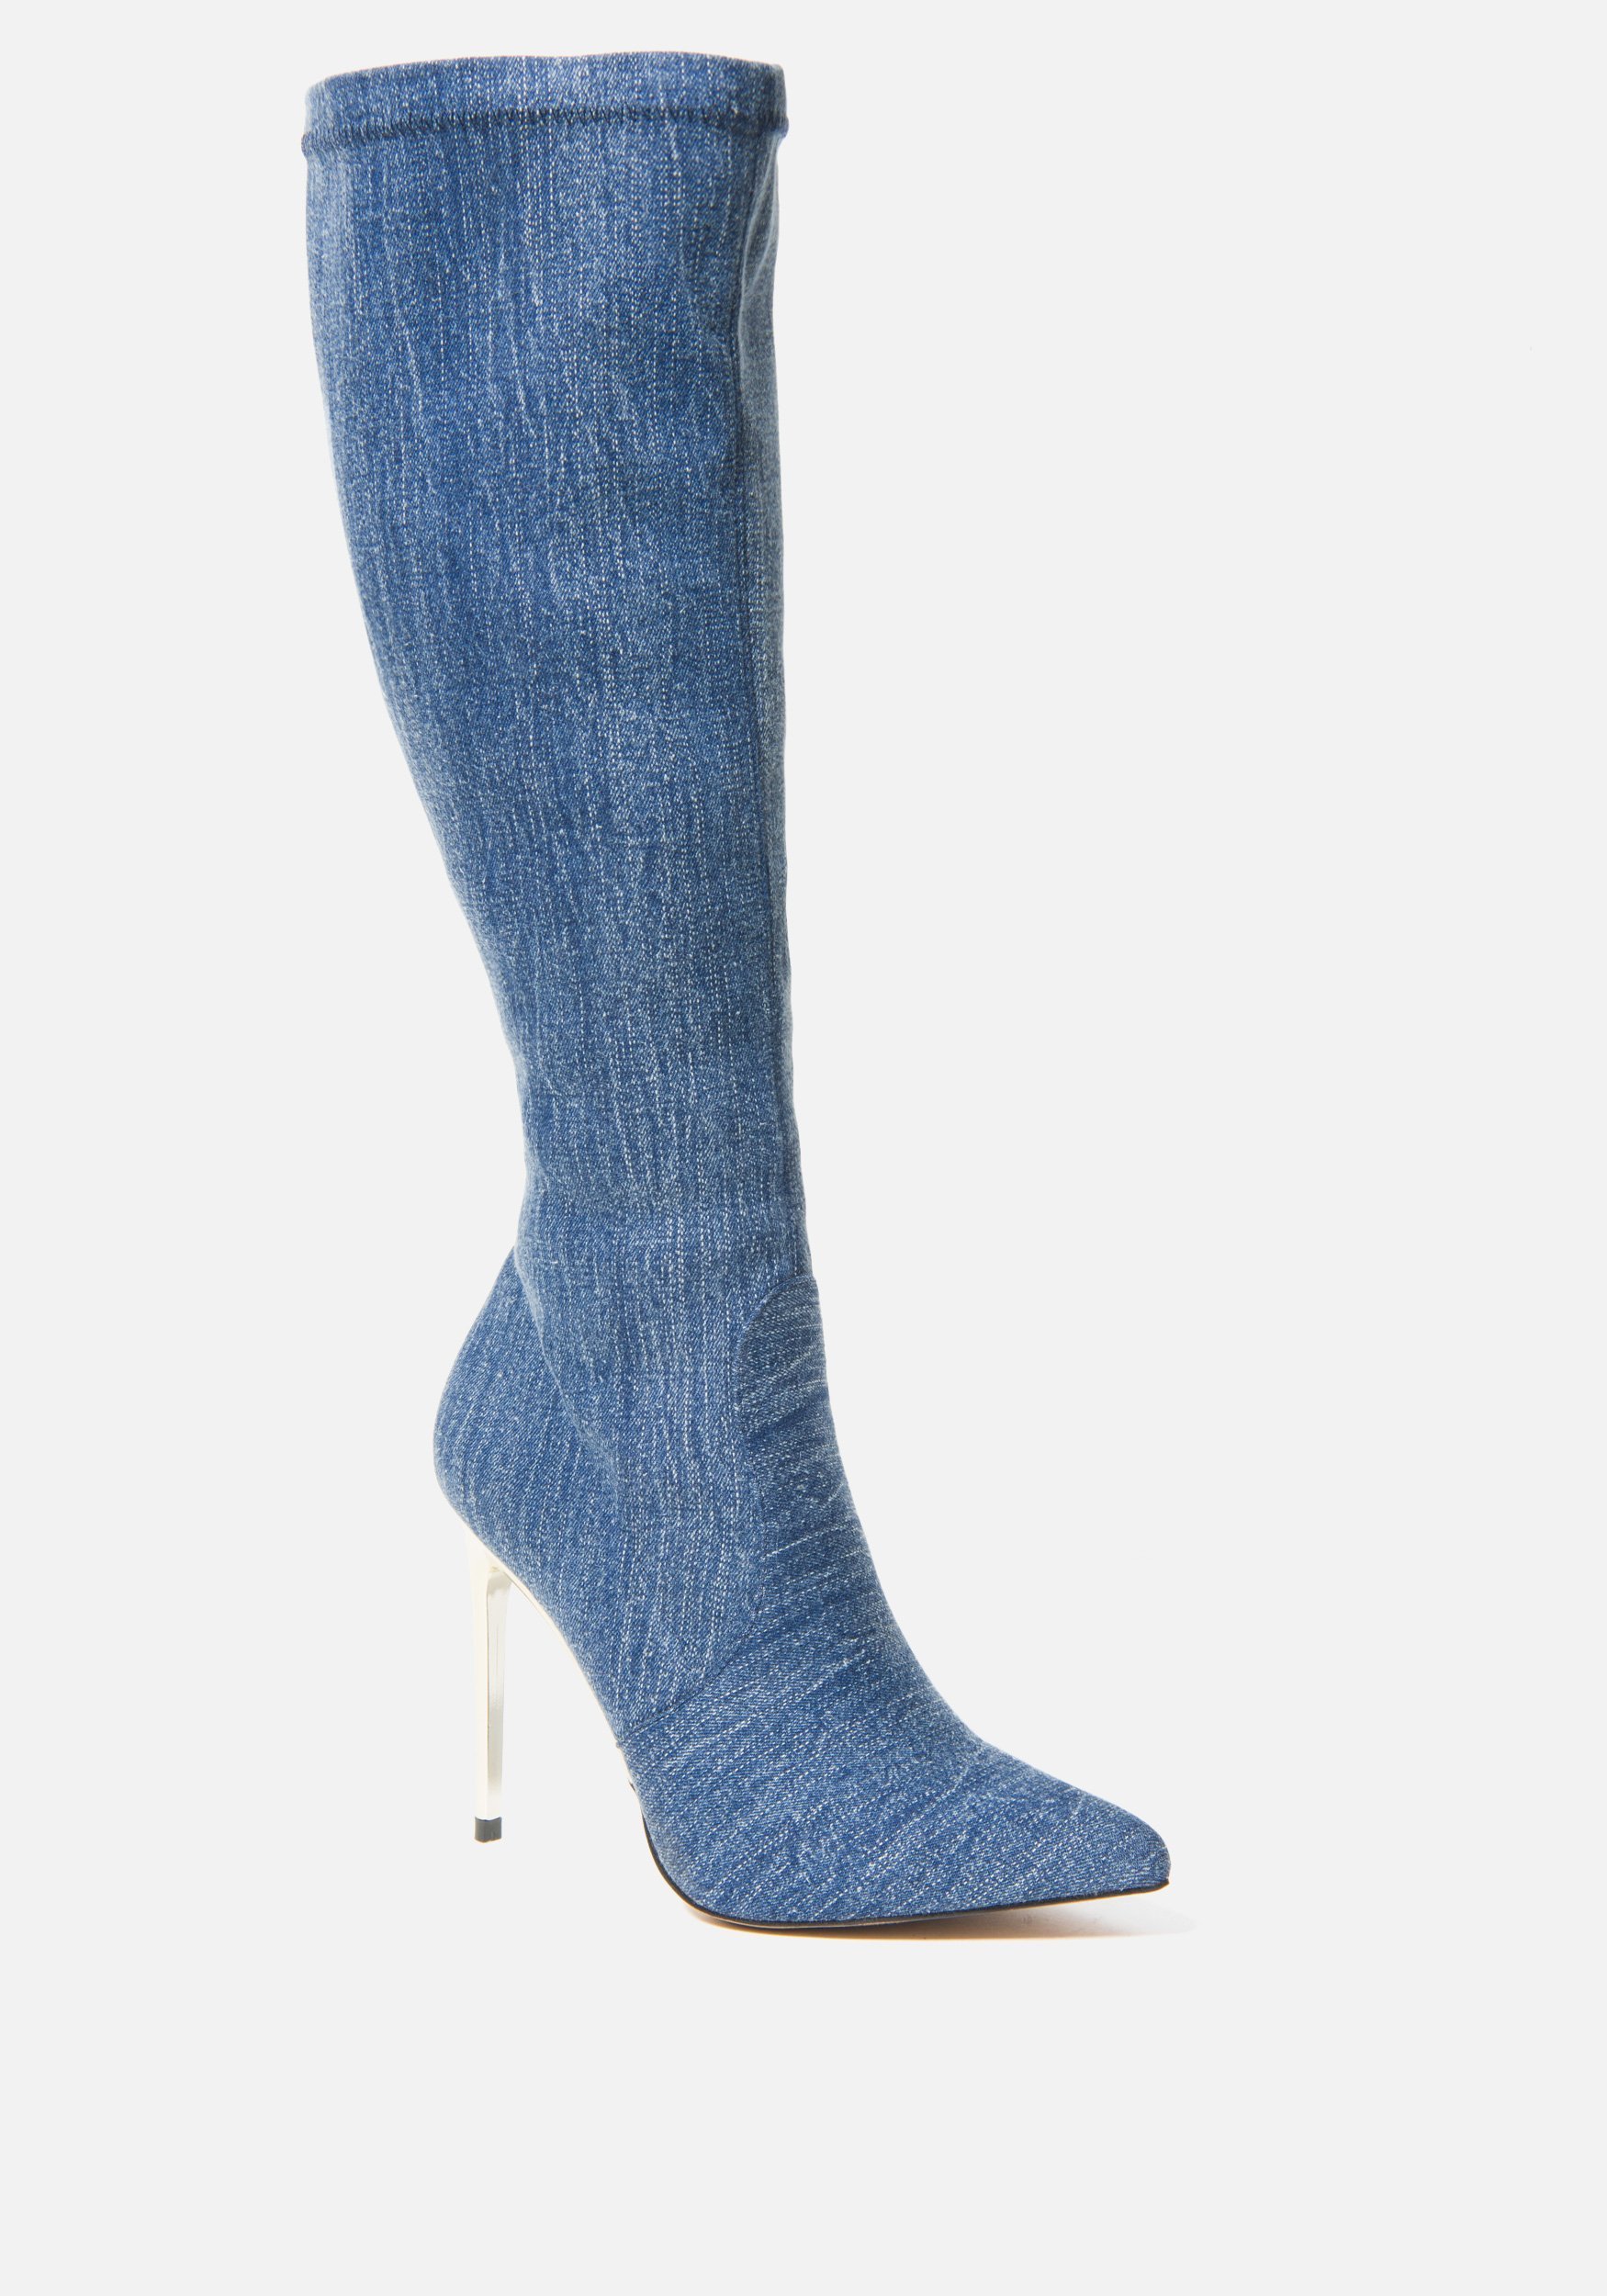 Bebe Women's Valeria Knee High Boots, Size 10.5 in DENIM Synthetic